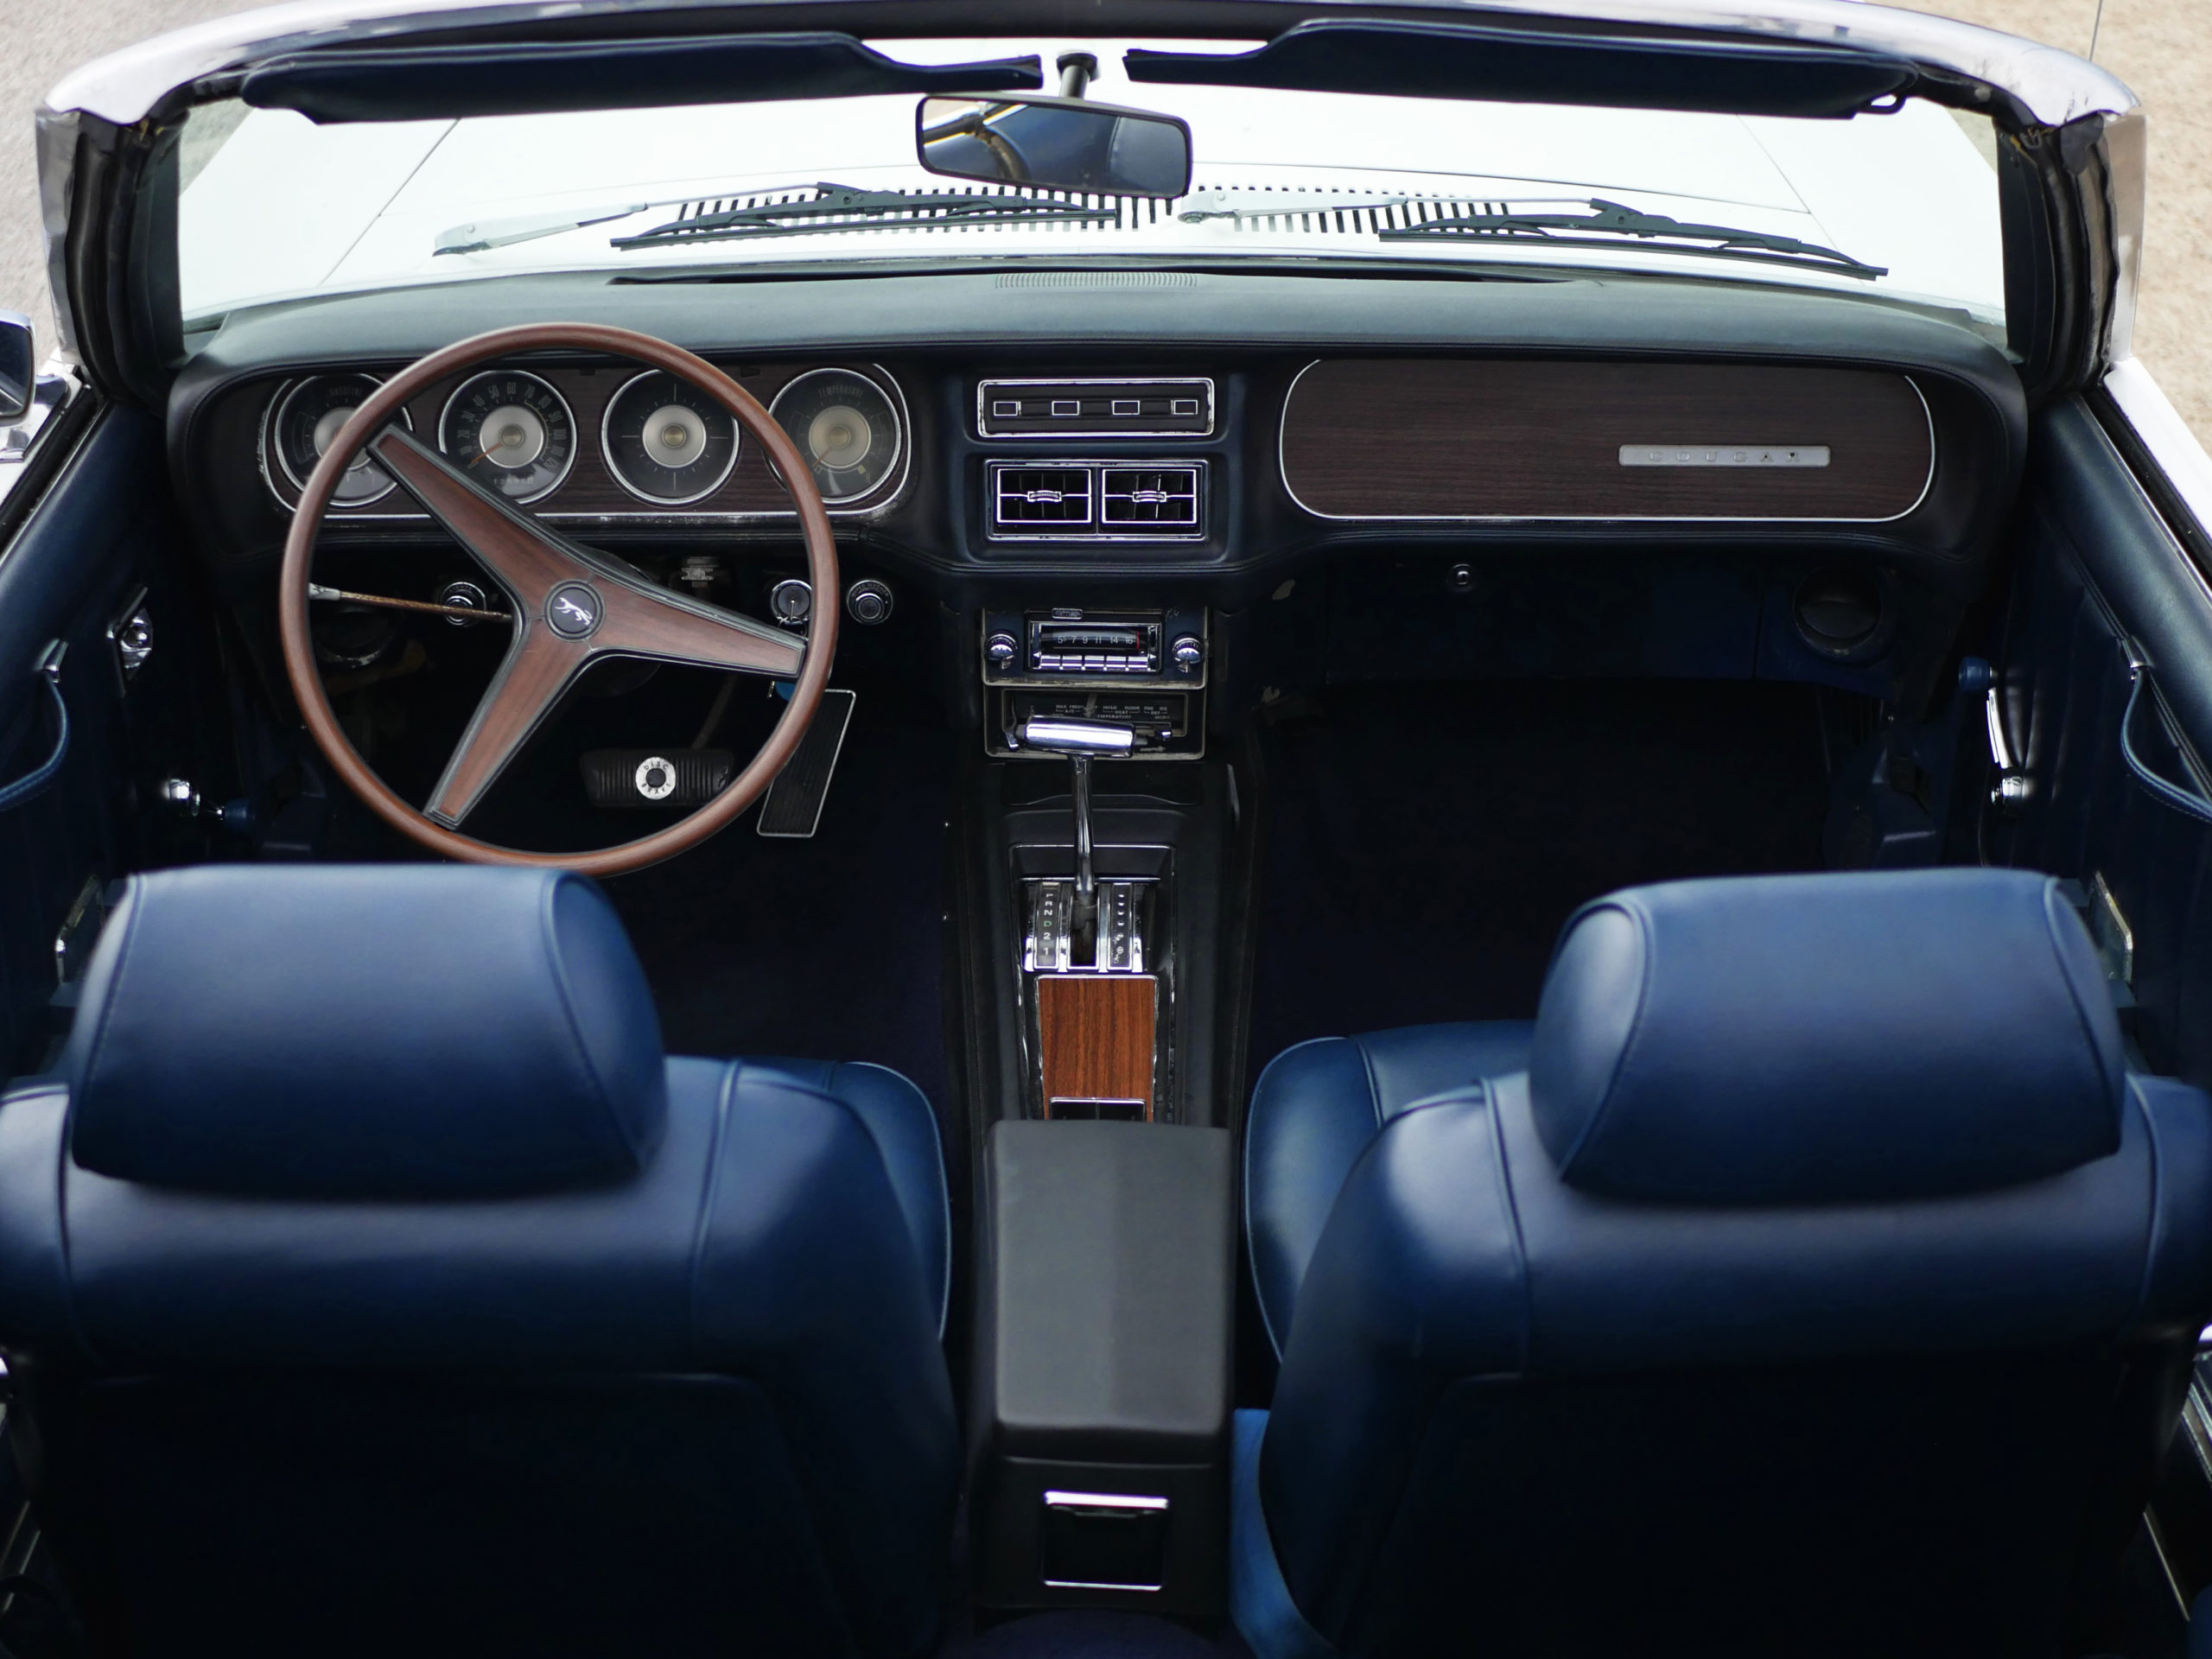 1969-mercury-cougar-dash-interior-monterey-touring-vehicles